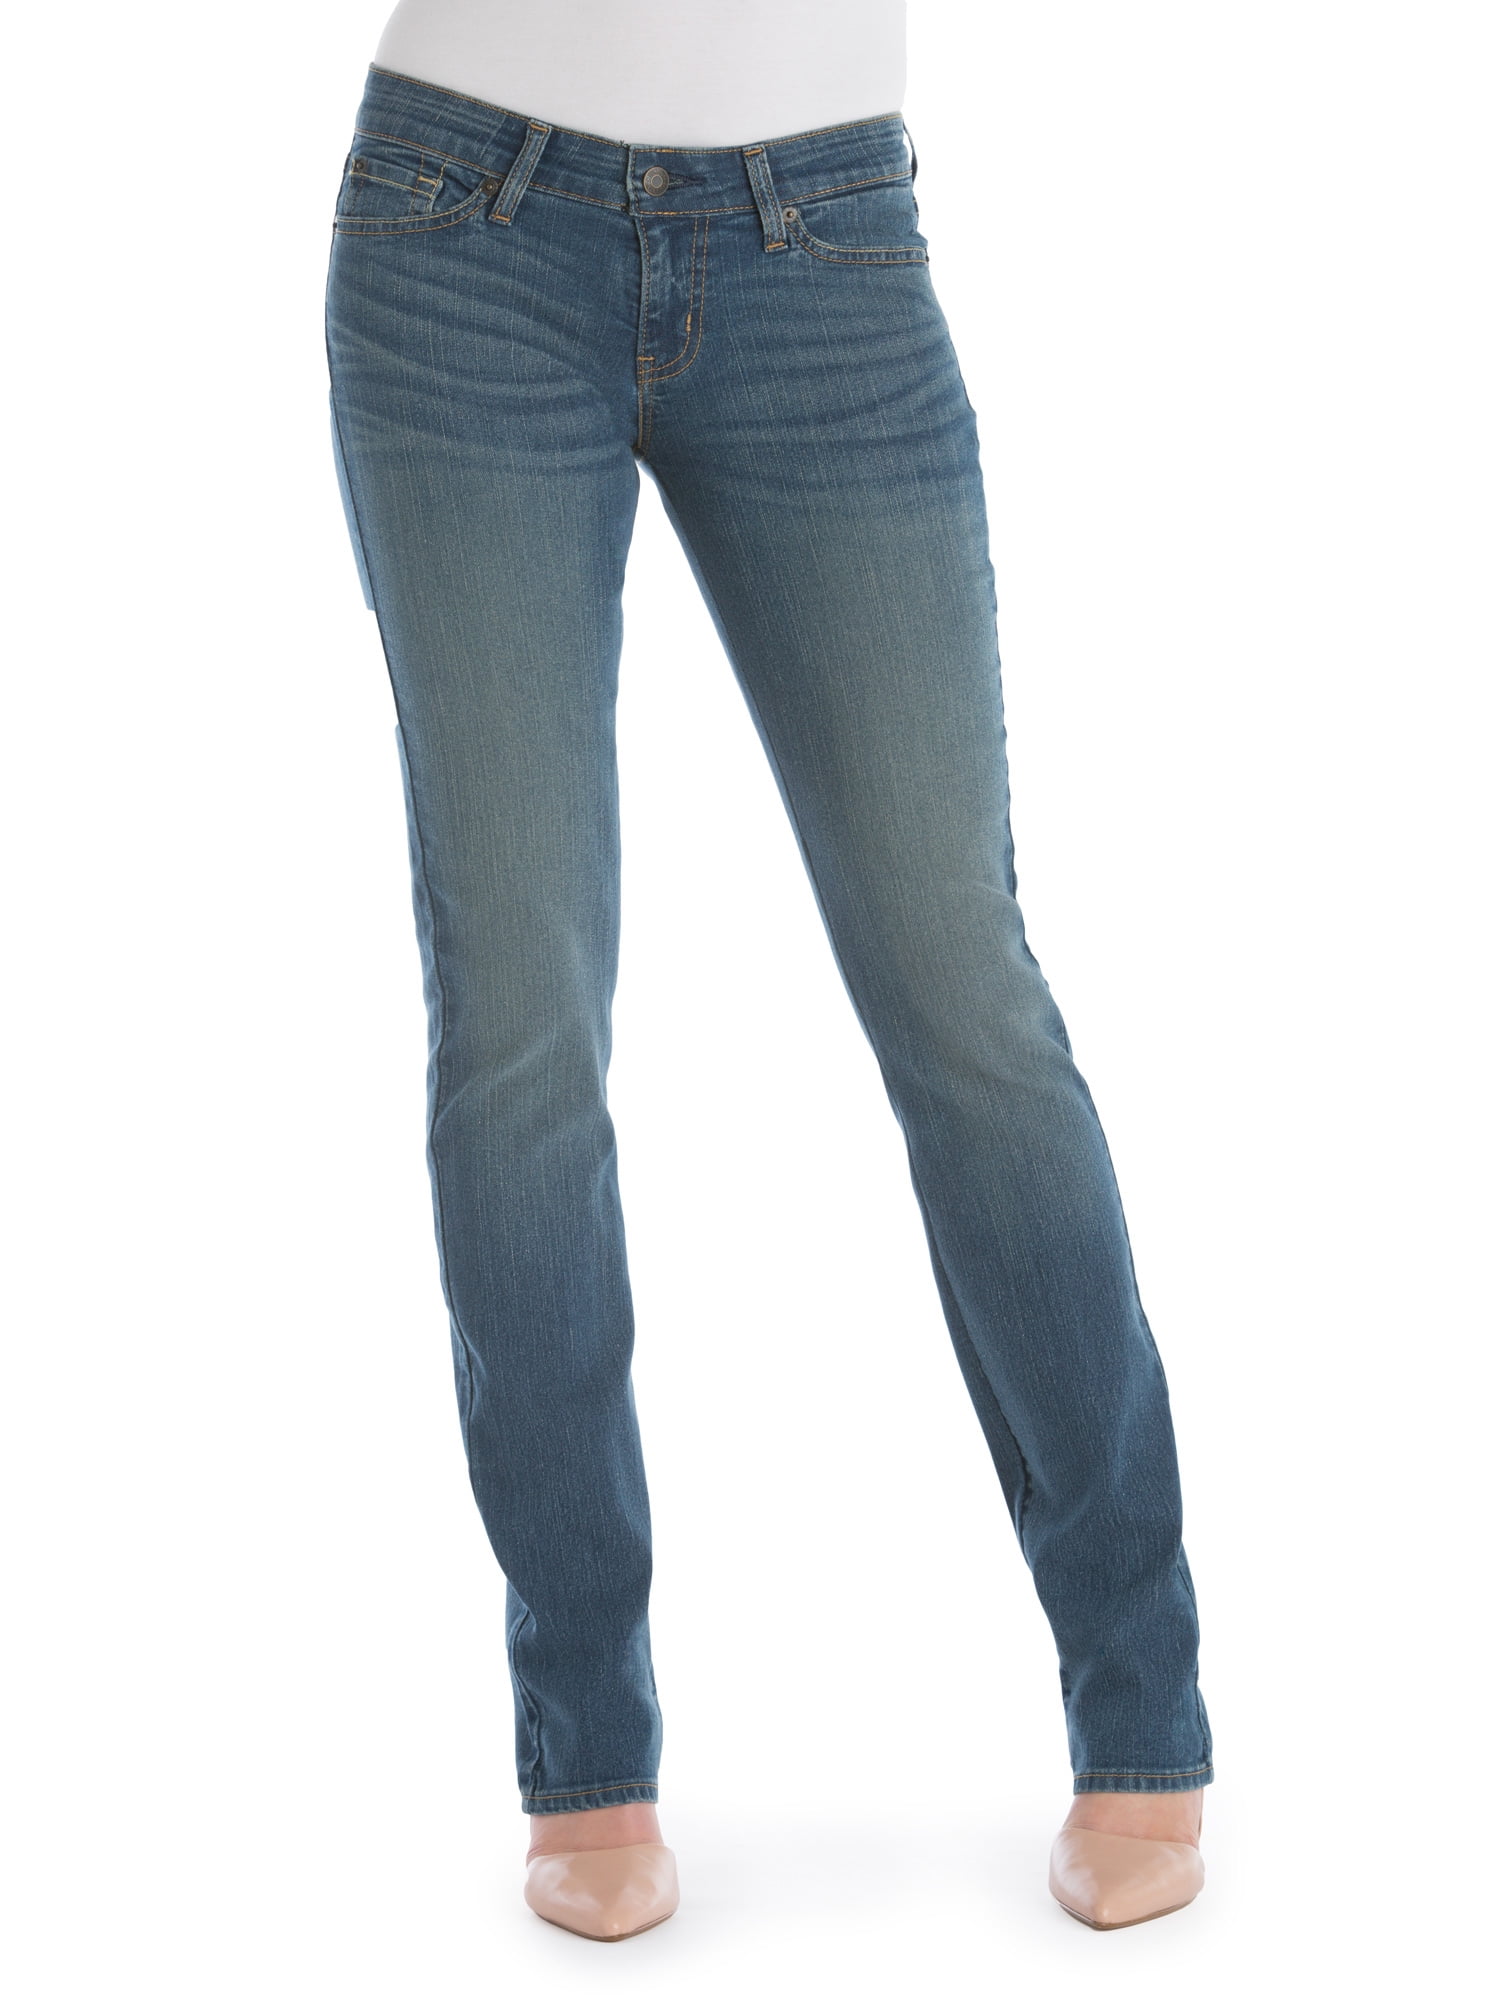 Introducir 35+ imagen signature levi's modern straight jeans ...